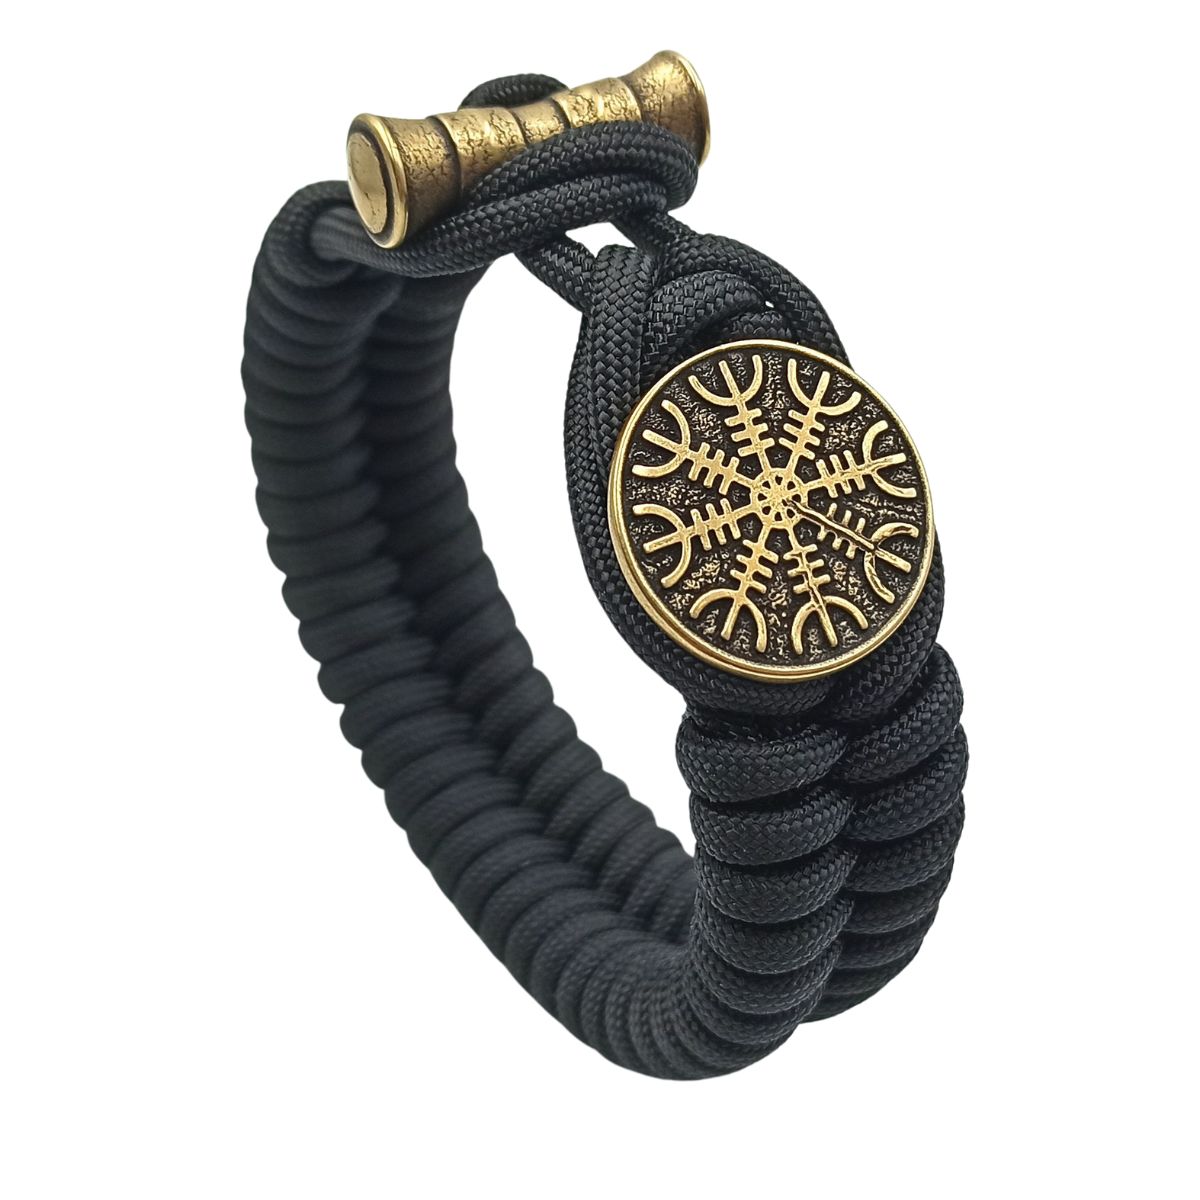 Helm of Awe paracord bracelet 6 inch | 15 Cm 1 - Black 